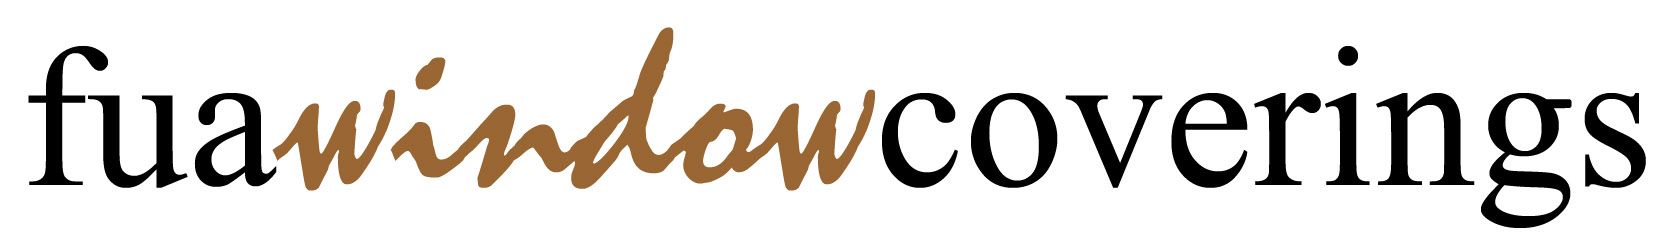 FUAwindowcoverings Logo